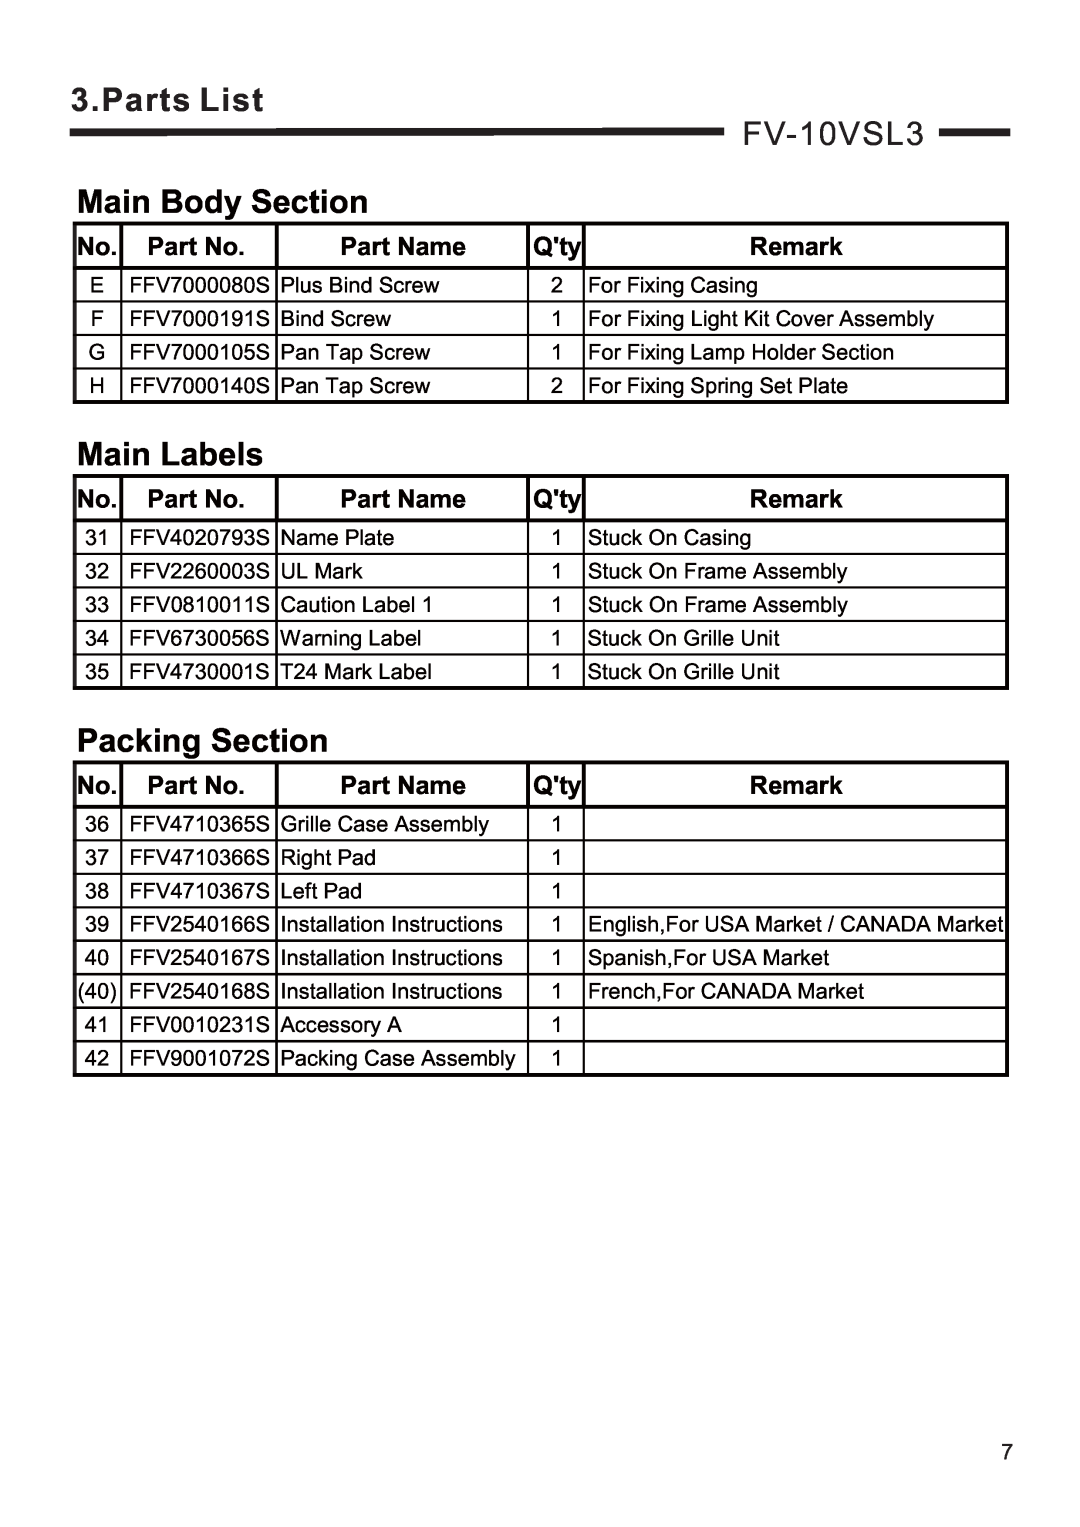 Panasonic FV-10VSL3, FV-08VSL3 service manual Parts List, Main Body Section, Main Labels, Packing Section, Part Name, Remark 